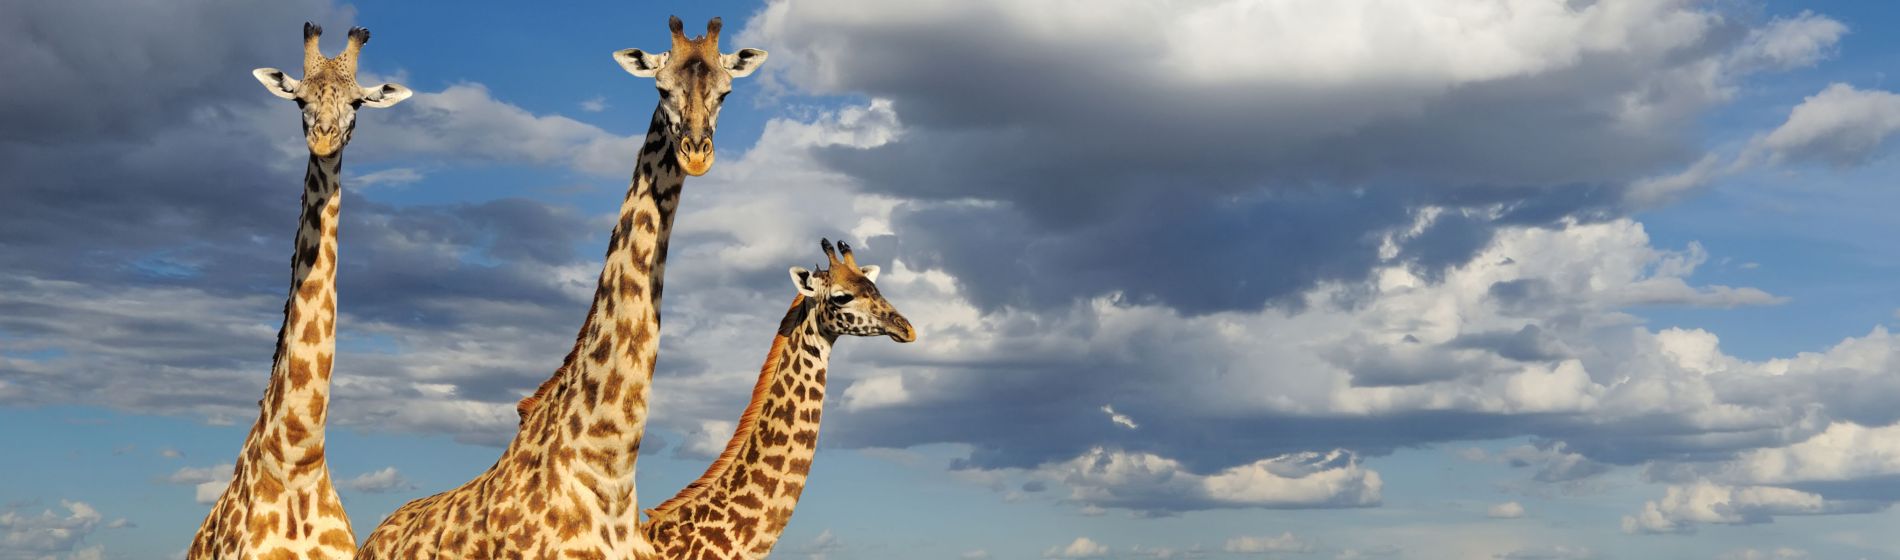 giraffen_kenya_header.jpg